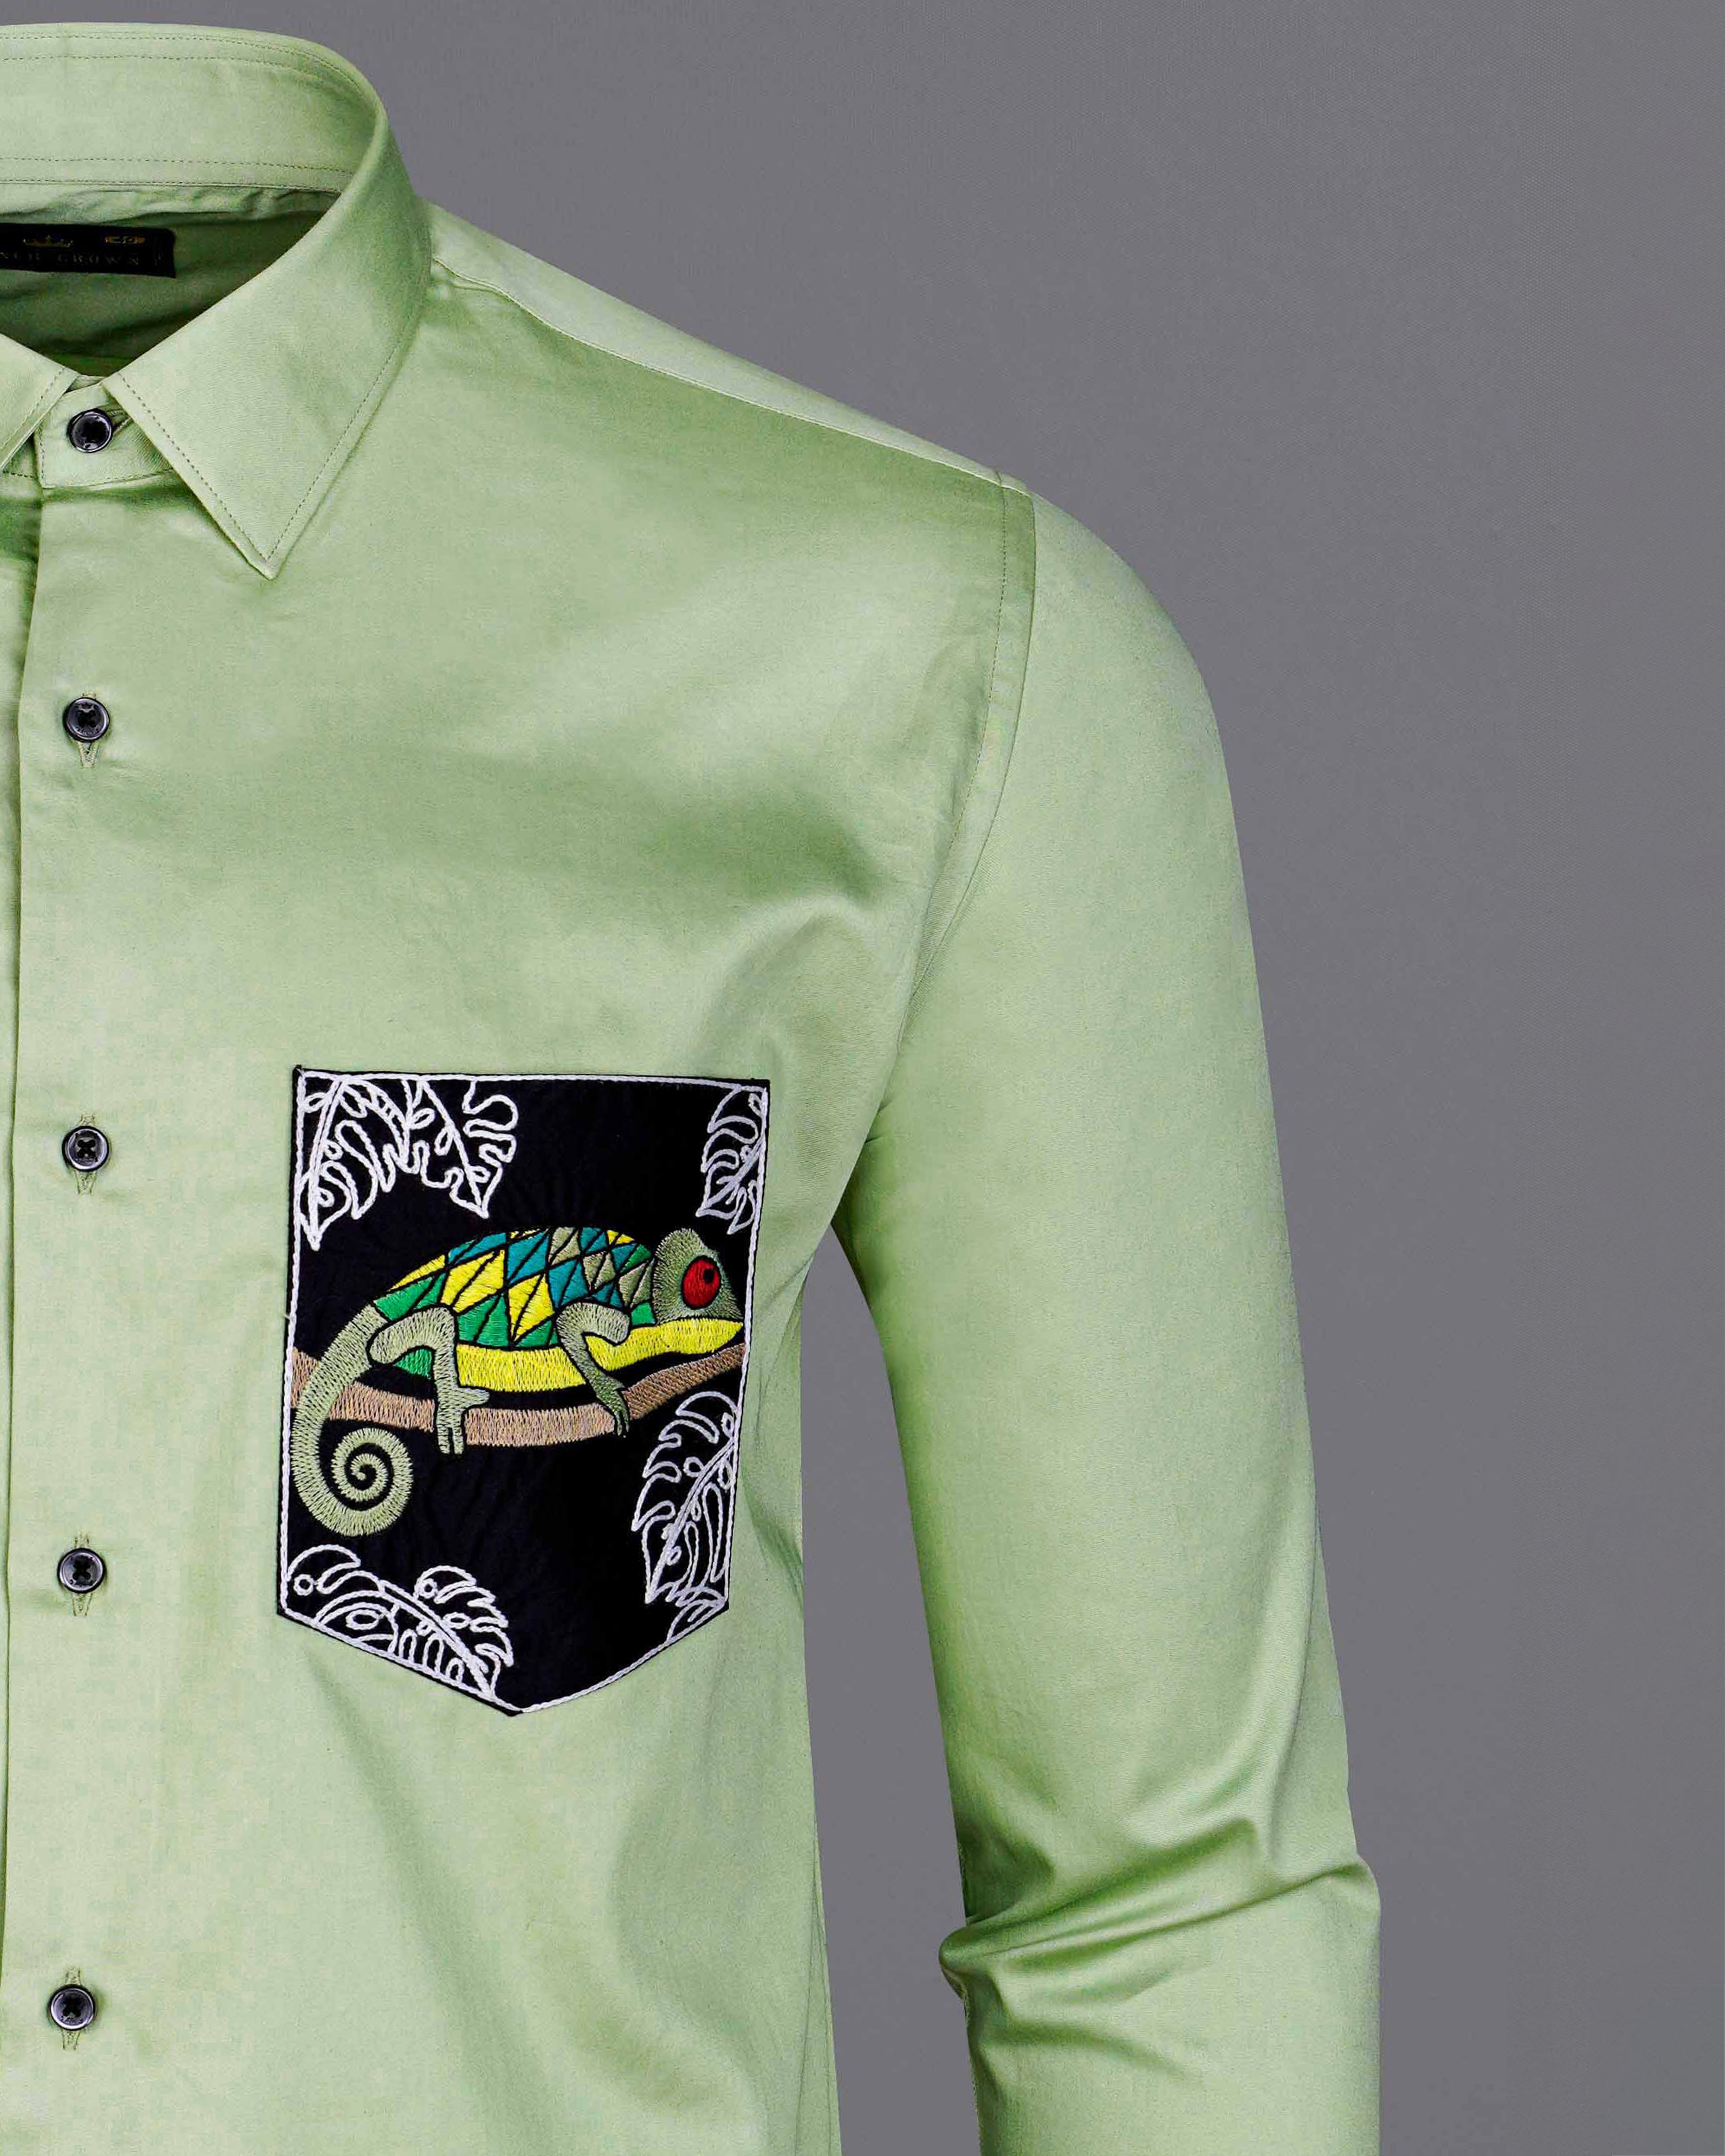 Timberwolf Green with Black Subtle Sheen Patch Pocket Chameleon Embroidered  Super Soft Premium Cotton Shirt 8438-BLK-E005-38, 8438-BLK-E005-H-38, 8438-BLK-E005-39, 8438-BLK-E005-H-39, 8438-BLK-E005-40, 8438-BLK-E005-H-40, 8438-BLK-E005-42, 8438-BLK-E005-H-42, 8438-BLK-E005-44, 8438-BLK-E005-H-44, 8438-BLK-E005-46, 8438-BLK-E005-H-46, 8438-BLK-E005-48, 8438-BLK-E005-H-48, 8438-BLK-E005-50, 8438-BLK-E005-H-50, 8438-BLK-E005-52, 8438-BLK-E005-H-52